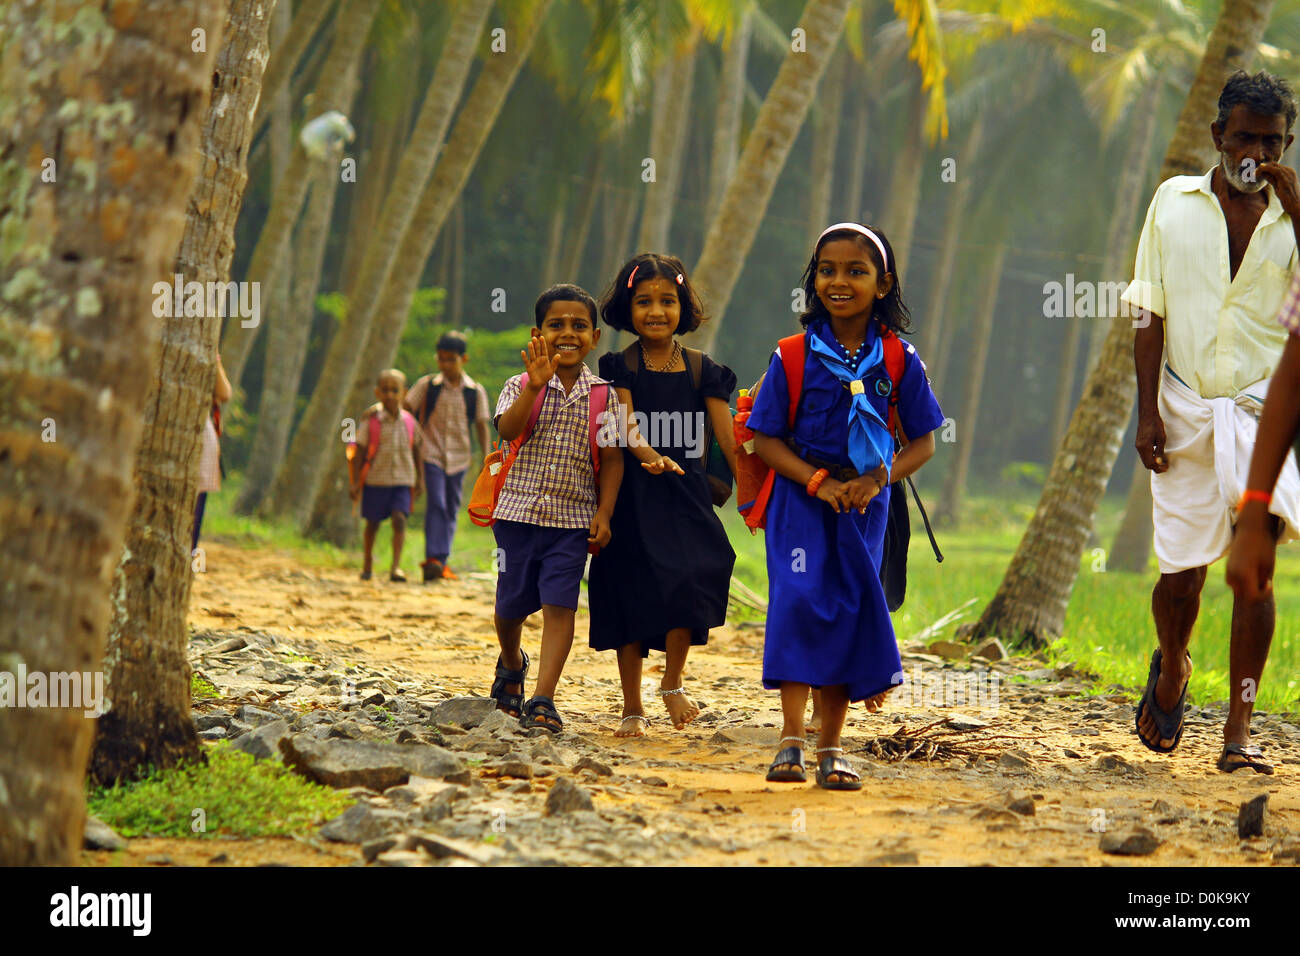 Rural india - Children going to school Stock Photo